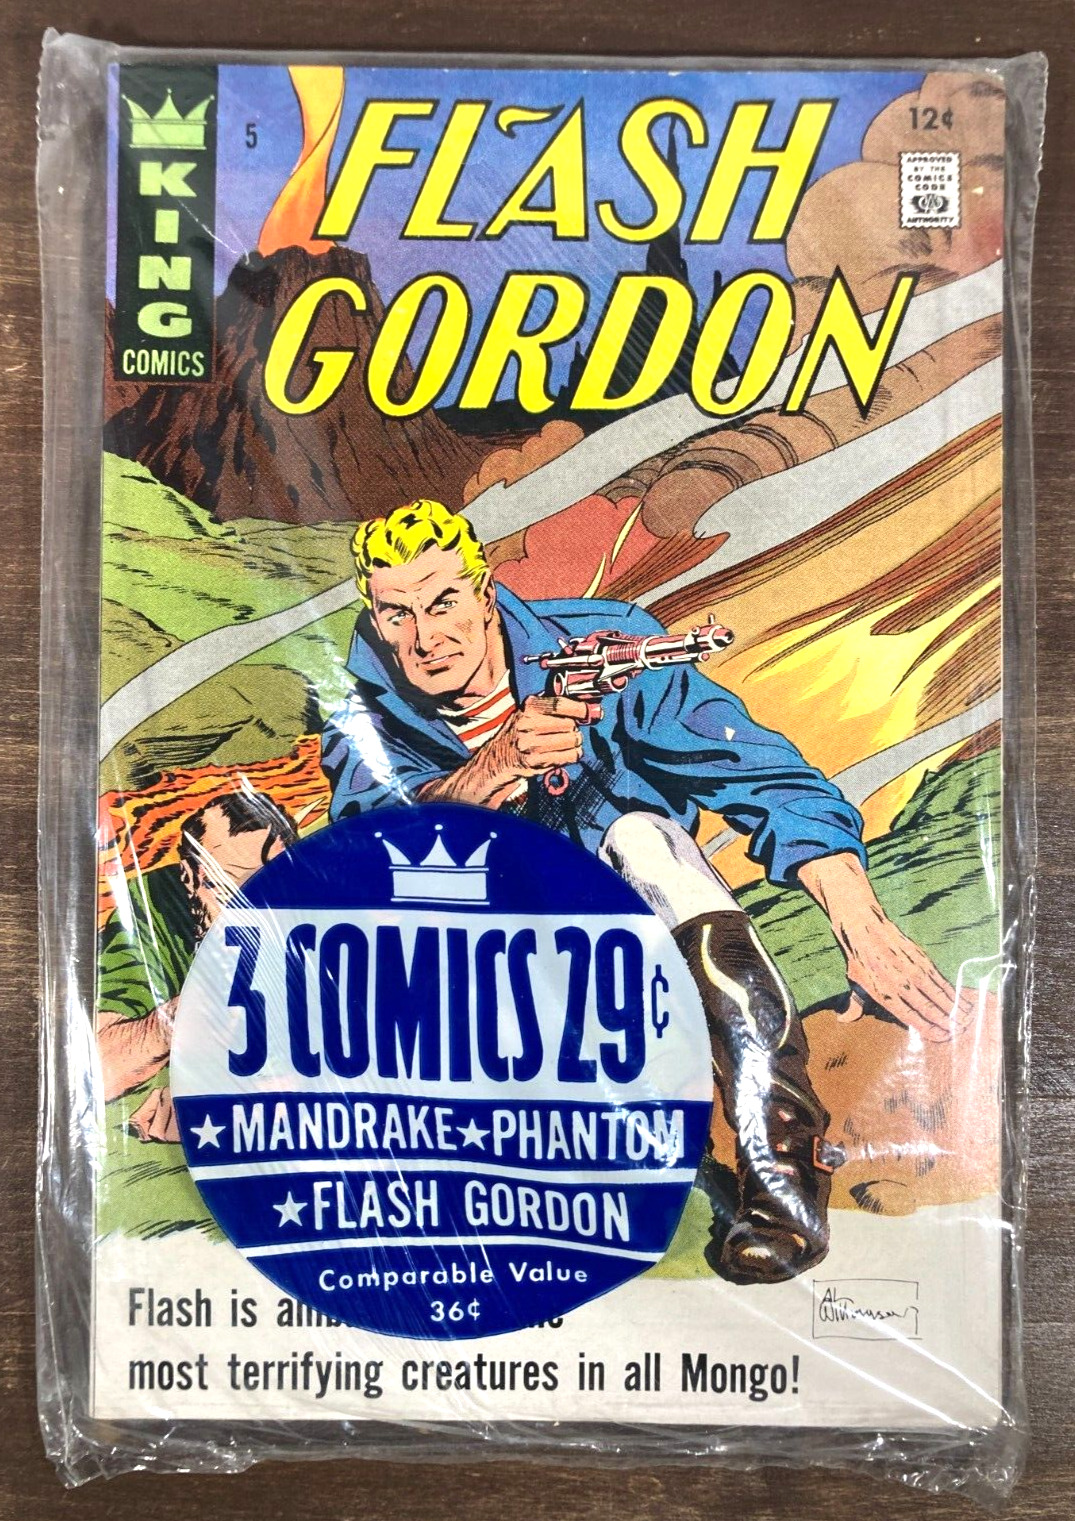 KING COMICS 3-Pack 1967 The PHANTOM #22 MANDRAKE #5 FLASH GORDON #5 Sealed VF/NM